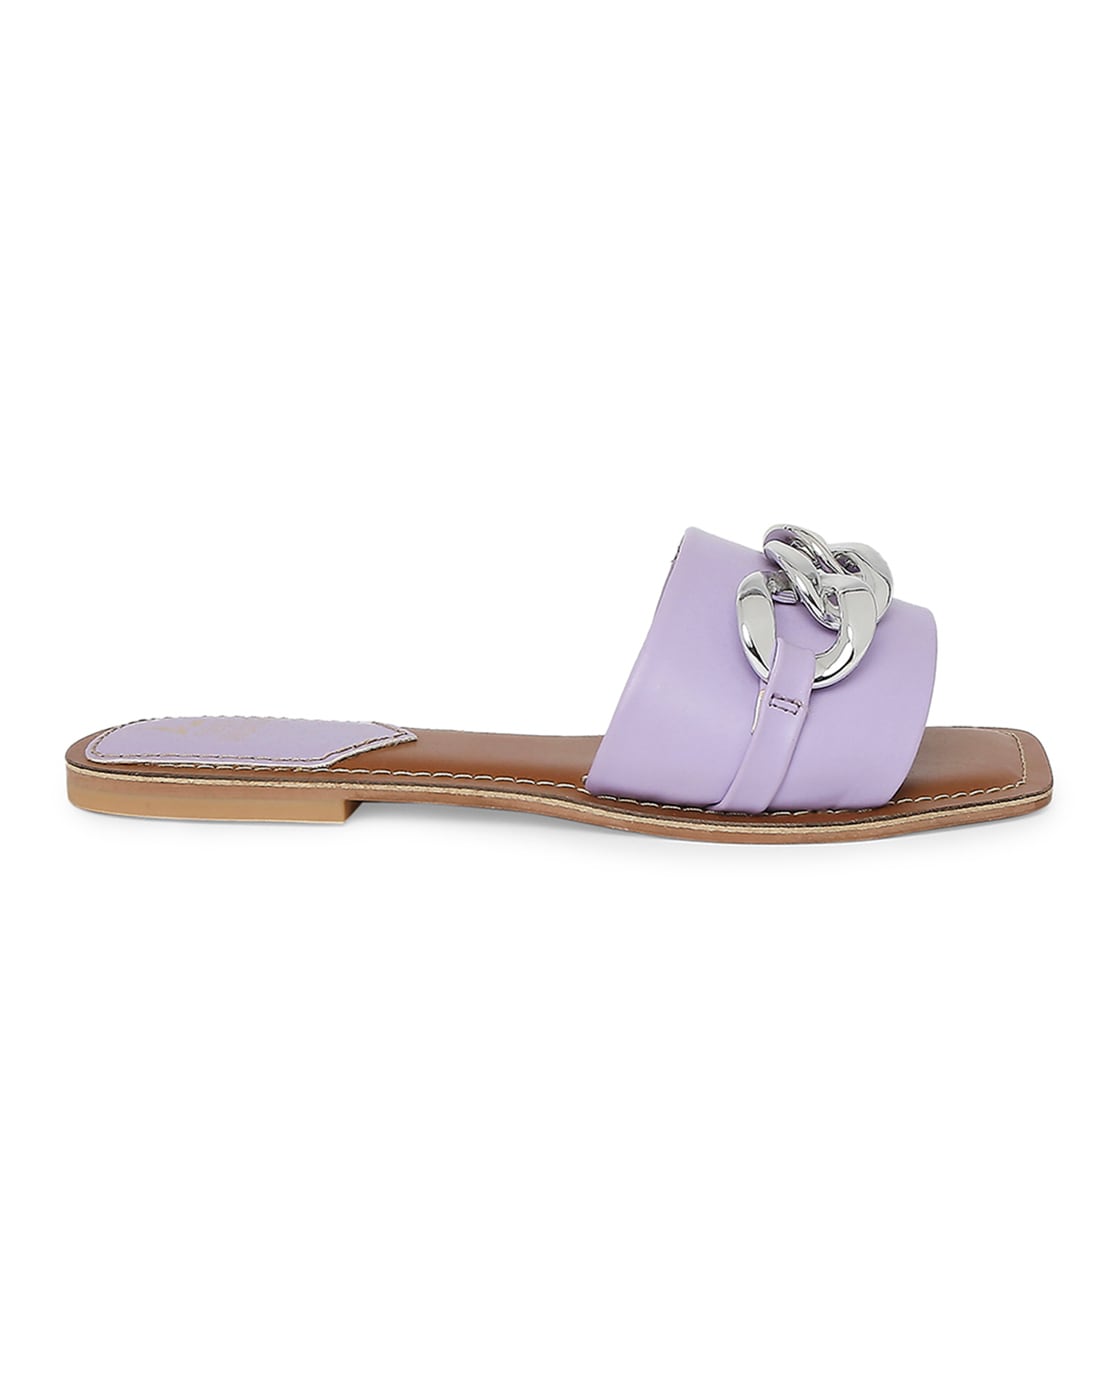 Buy Tan Brown Flat Sandals for Women by LAZERA Online | Ajio.com